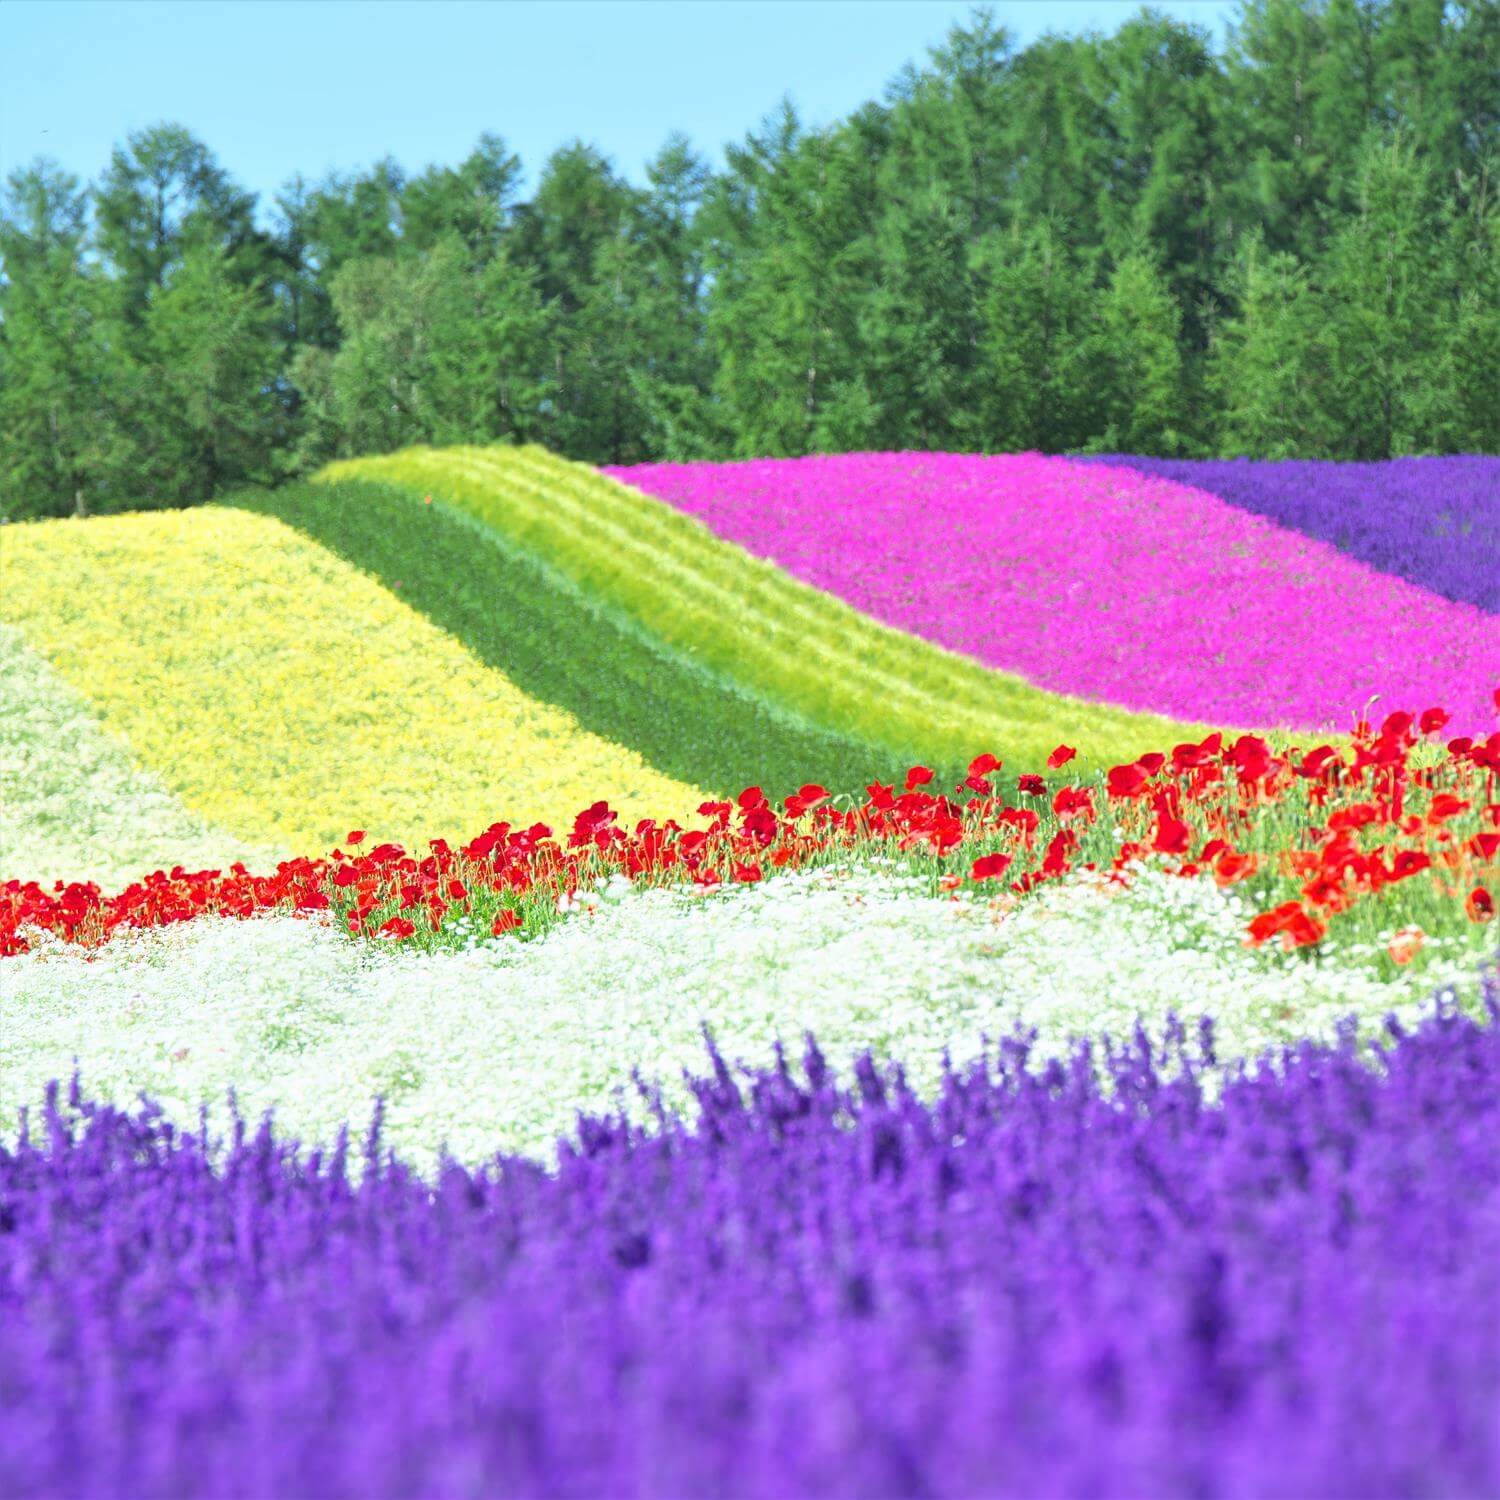 Landscapes of Hokkaido's summer flower gardens = AdobeStock 9